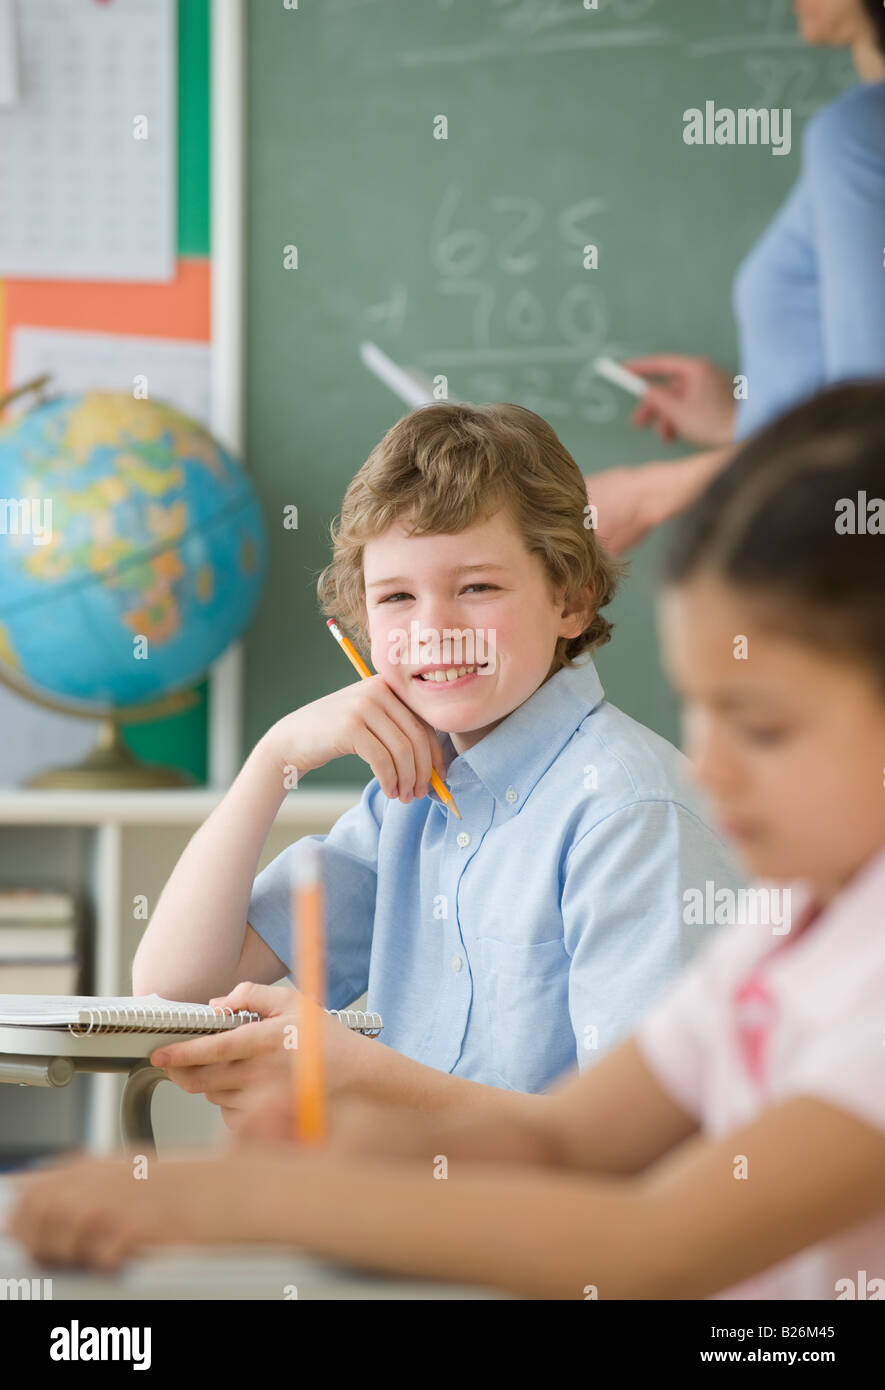 Boy holding pencil at school desk Stock Photo